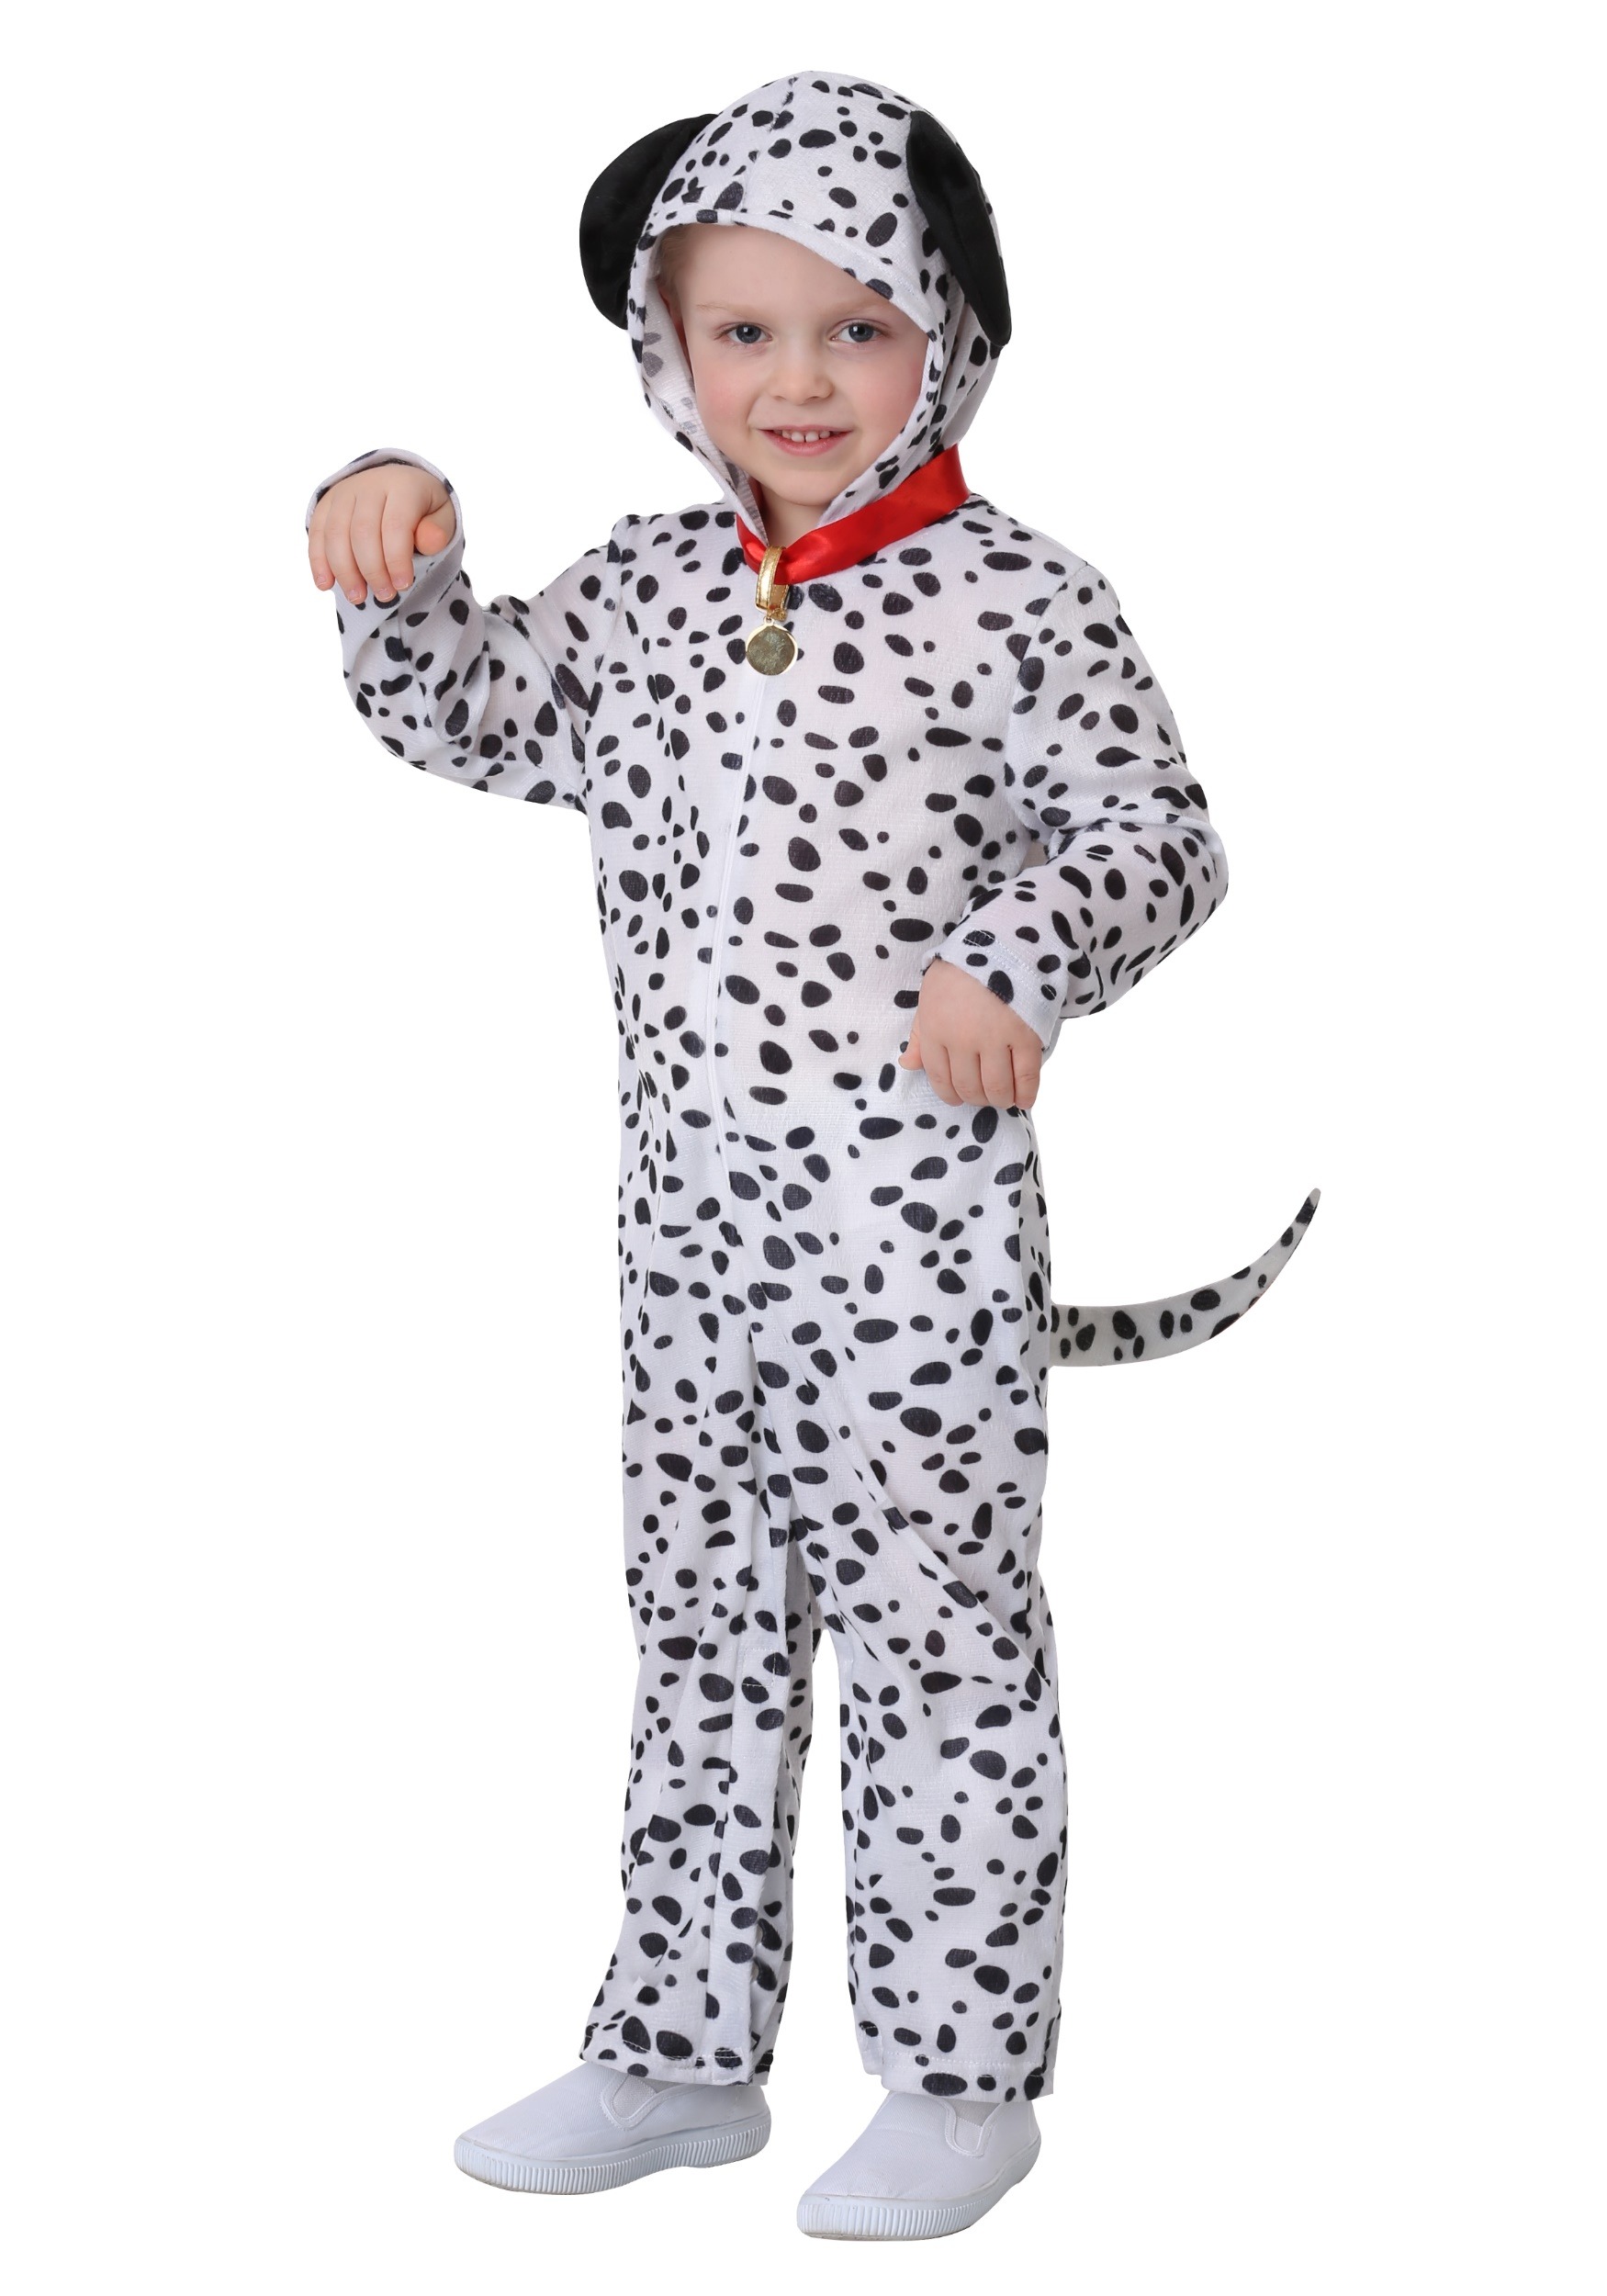 Delightful Dalmatian Toddler Costume